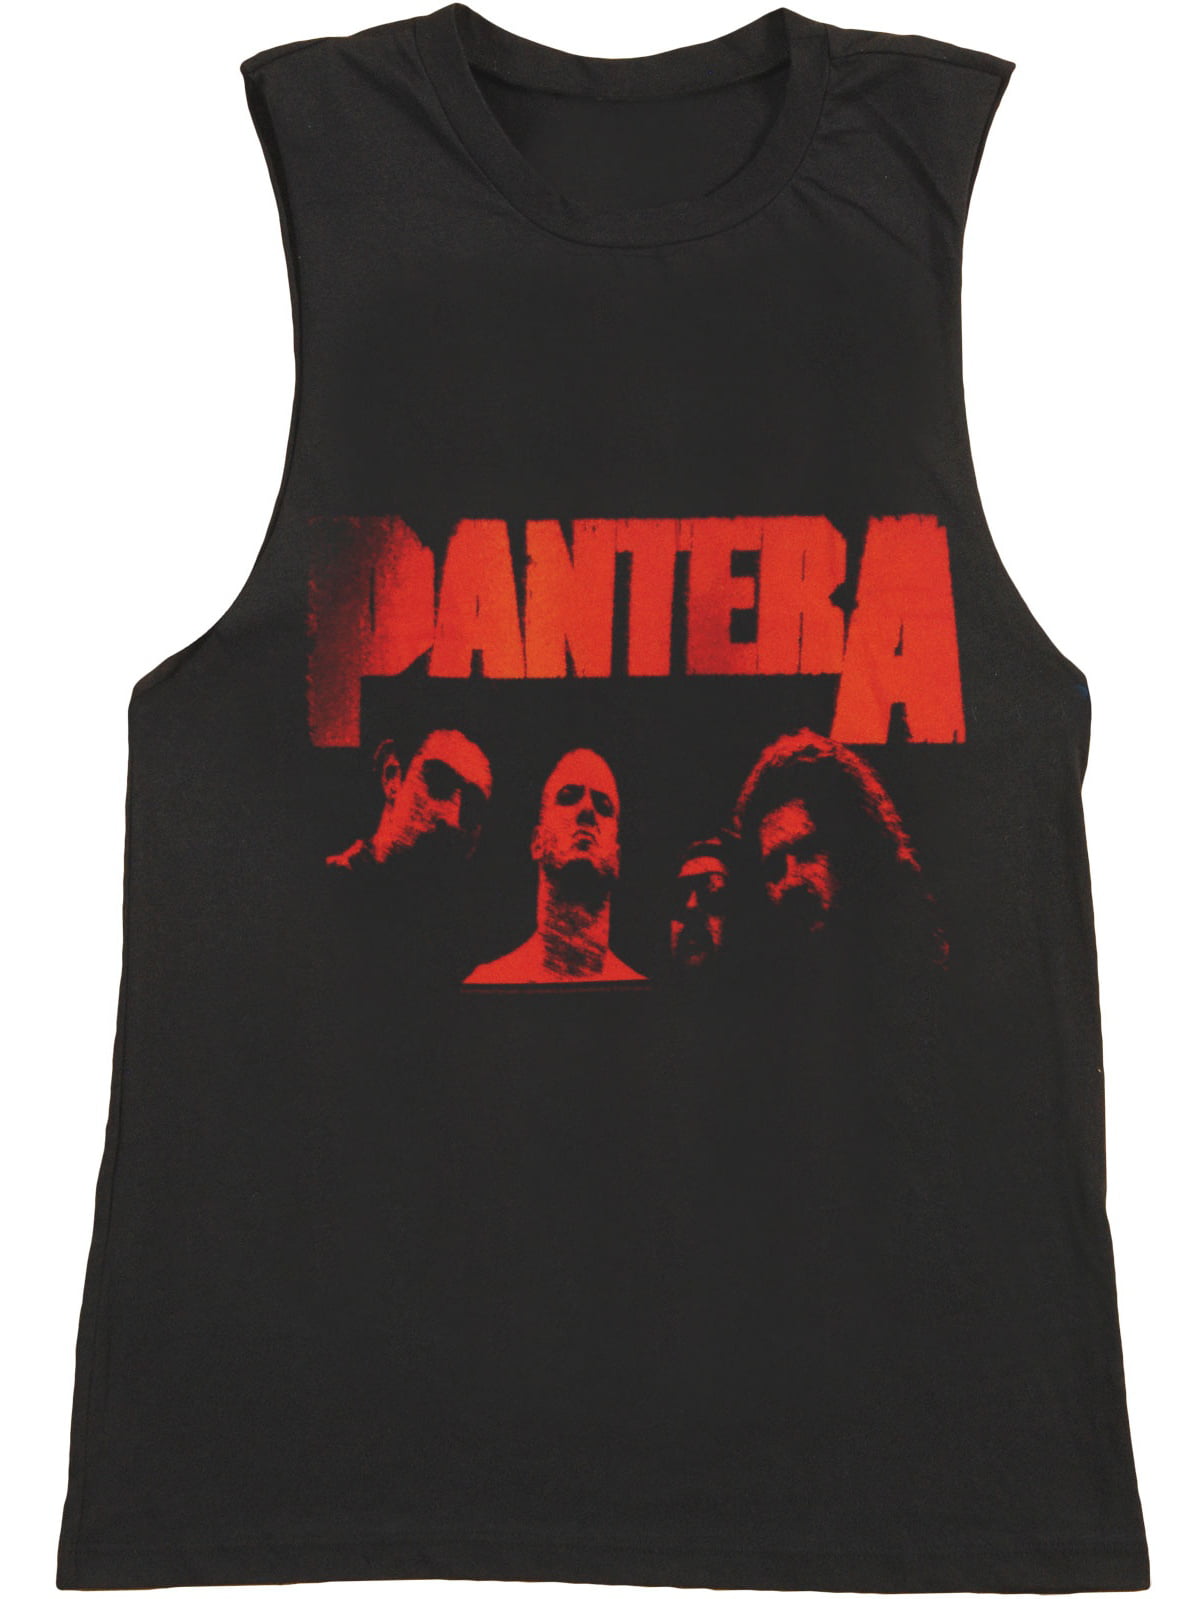 Pantera Red Faces Girls Juniors Black T Shirt New Official Band Merch